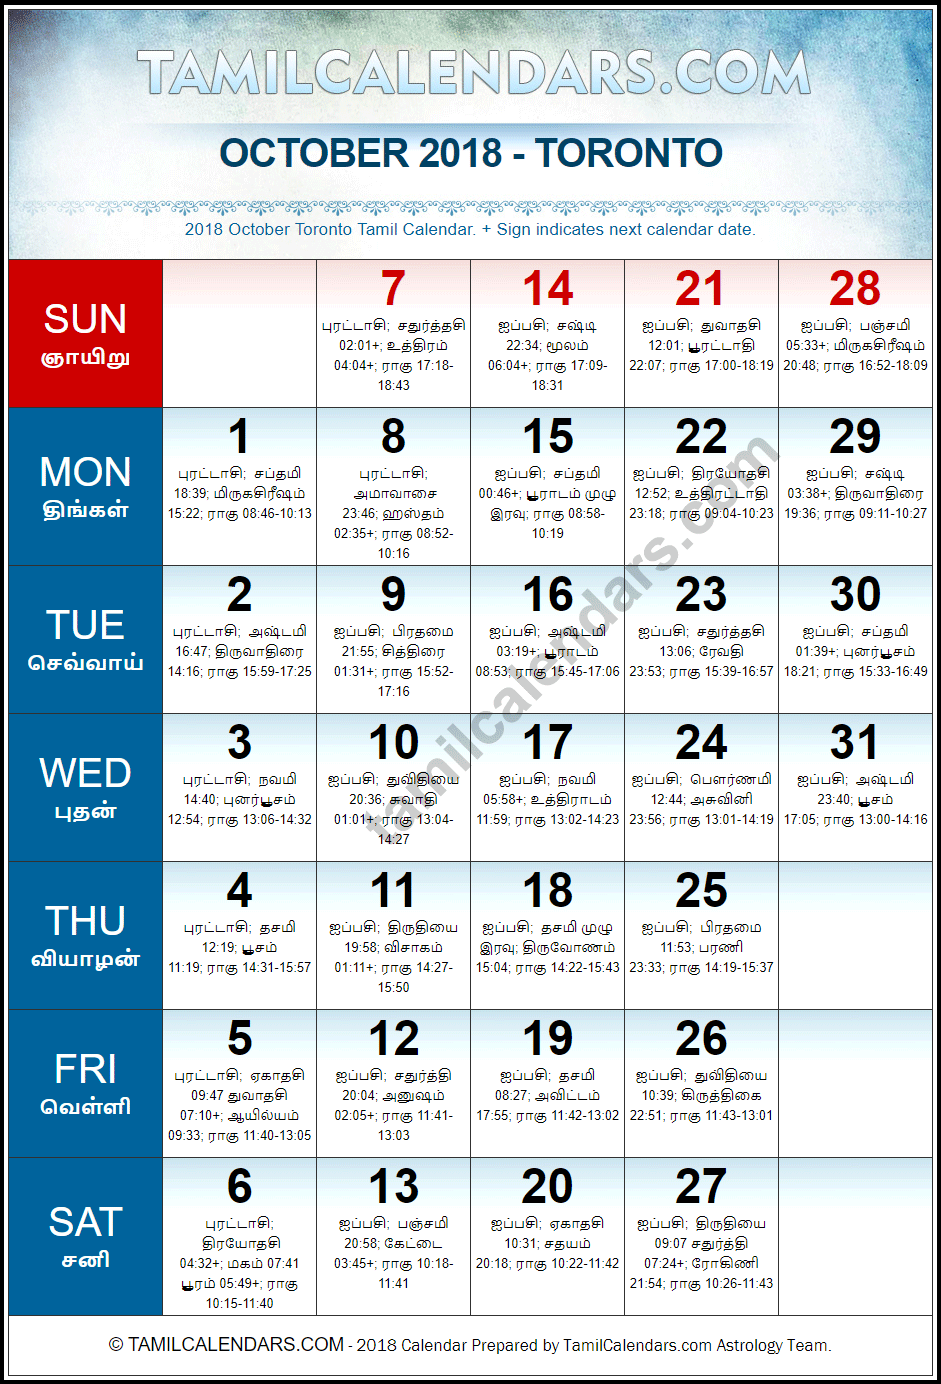 October 2018 Tamil Calendar for Toronto, Canada